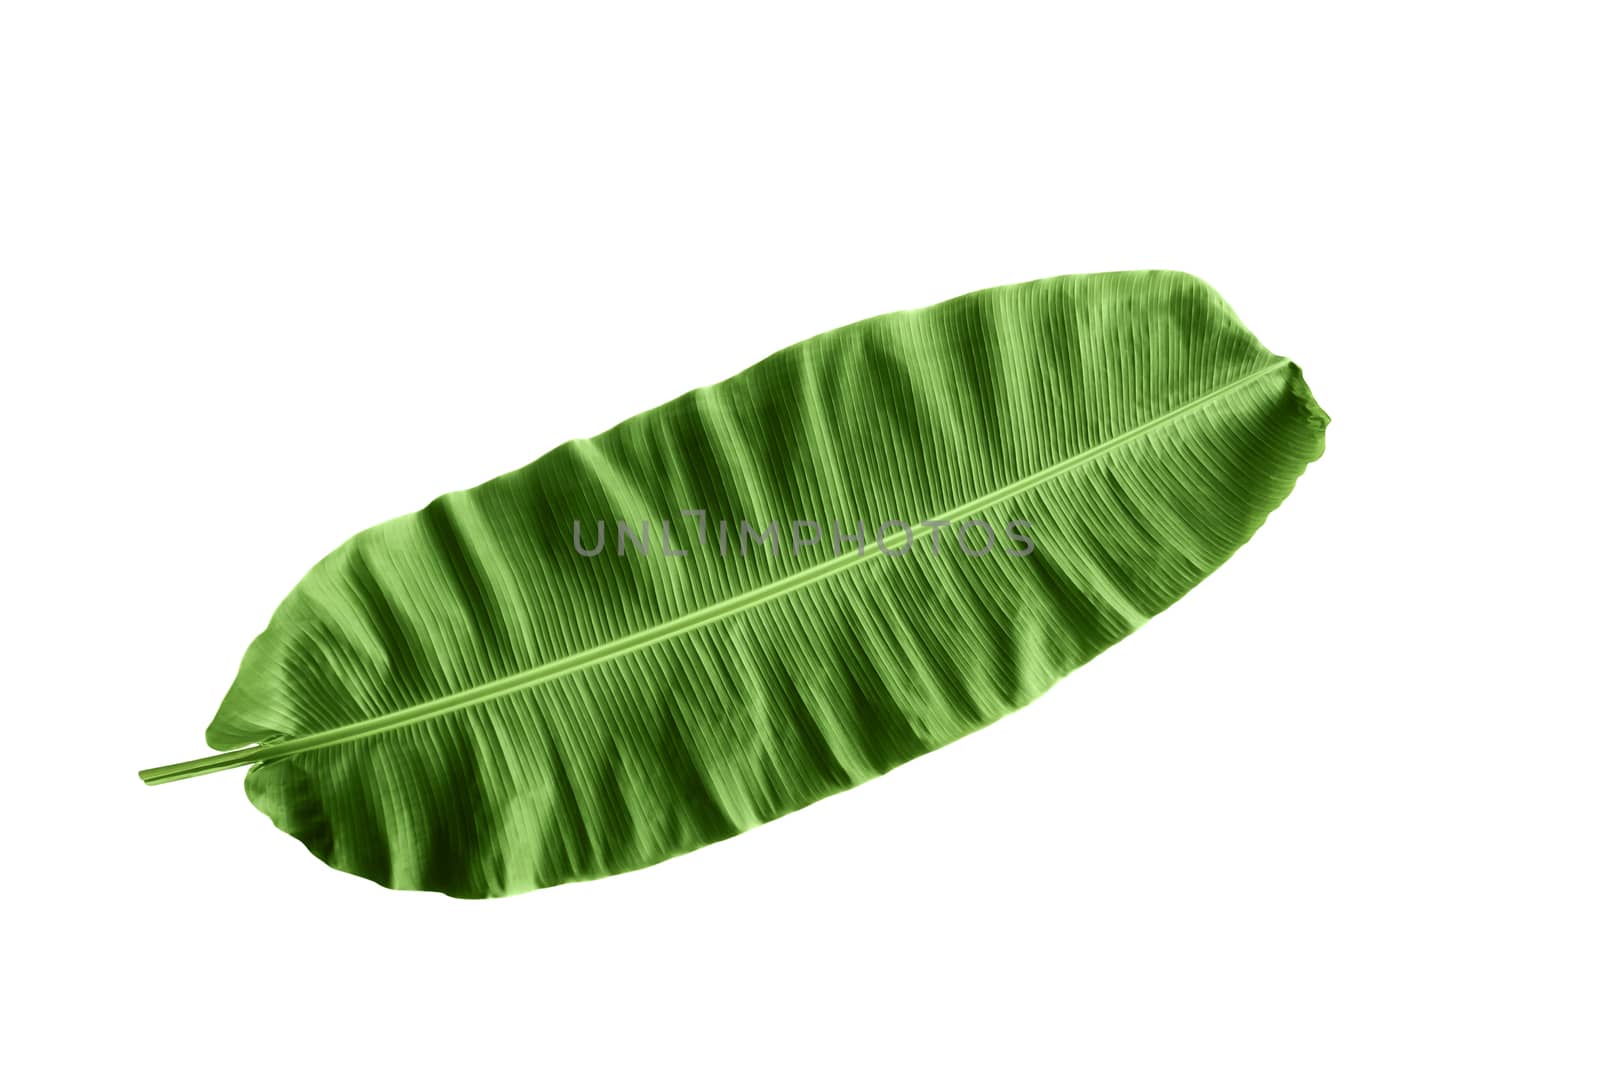 Isolated banana leaf, fresh natural green background  by KAZITAFAHNIZEER